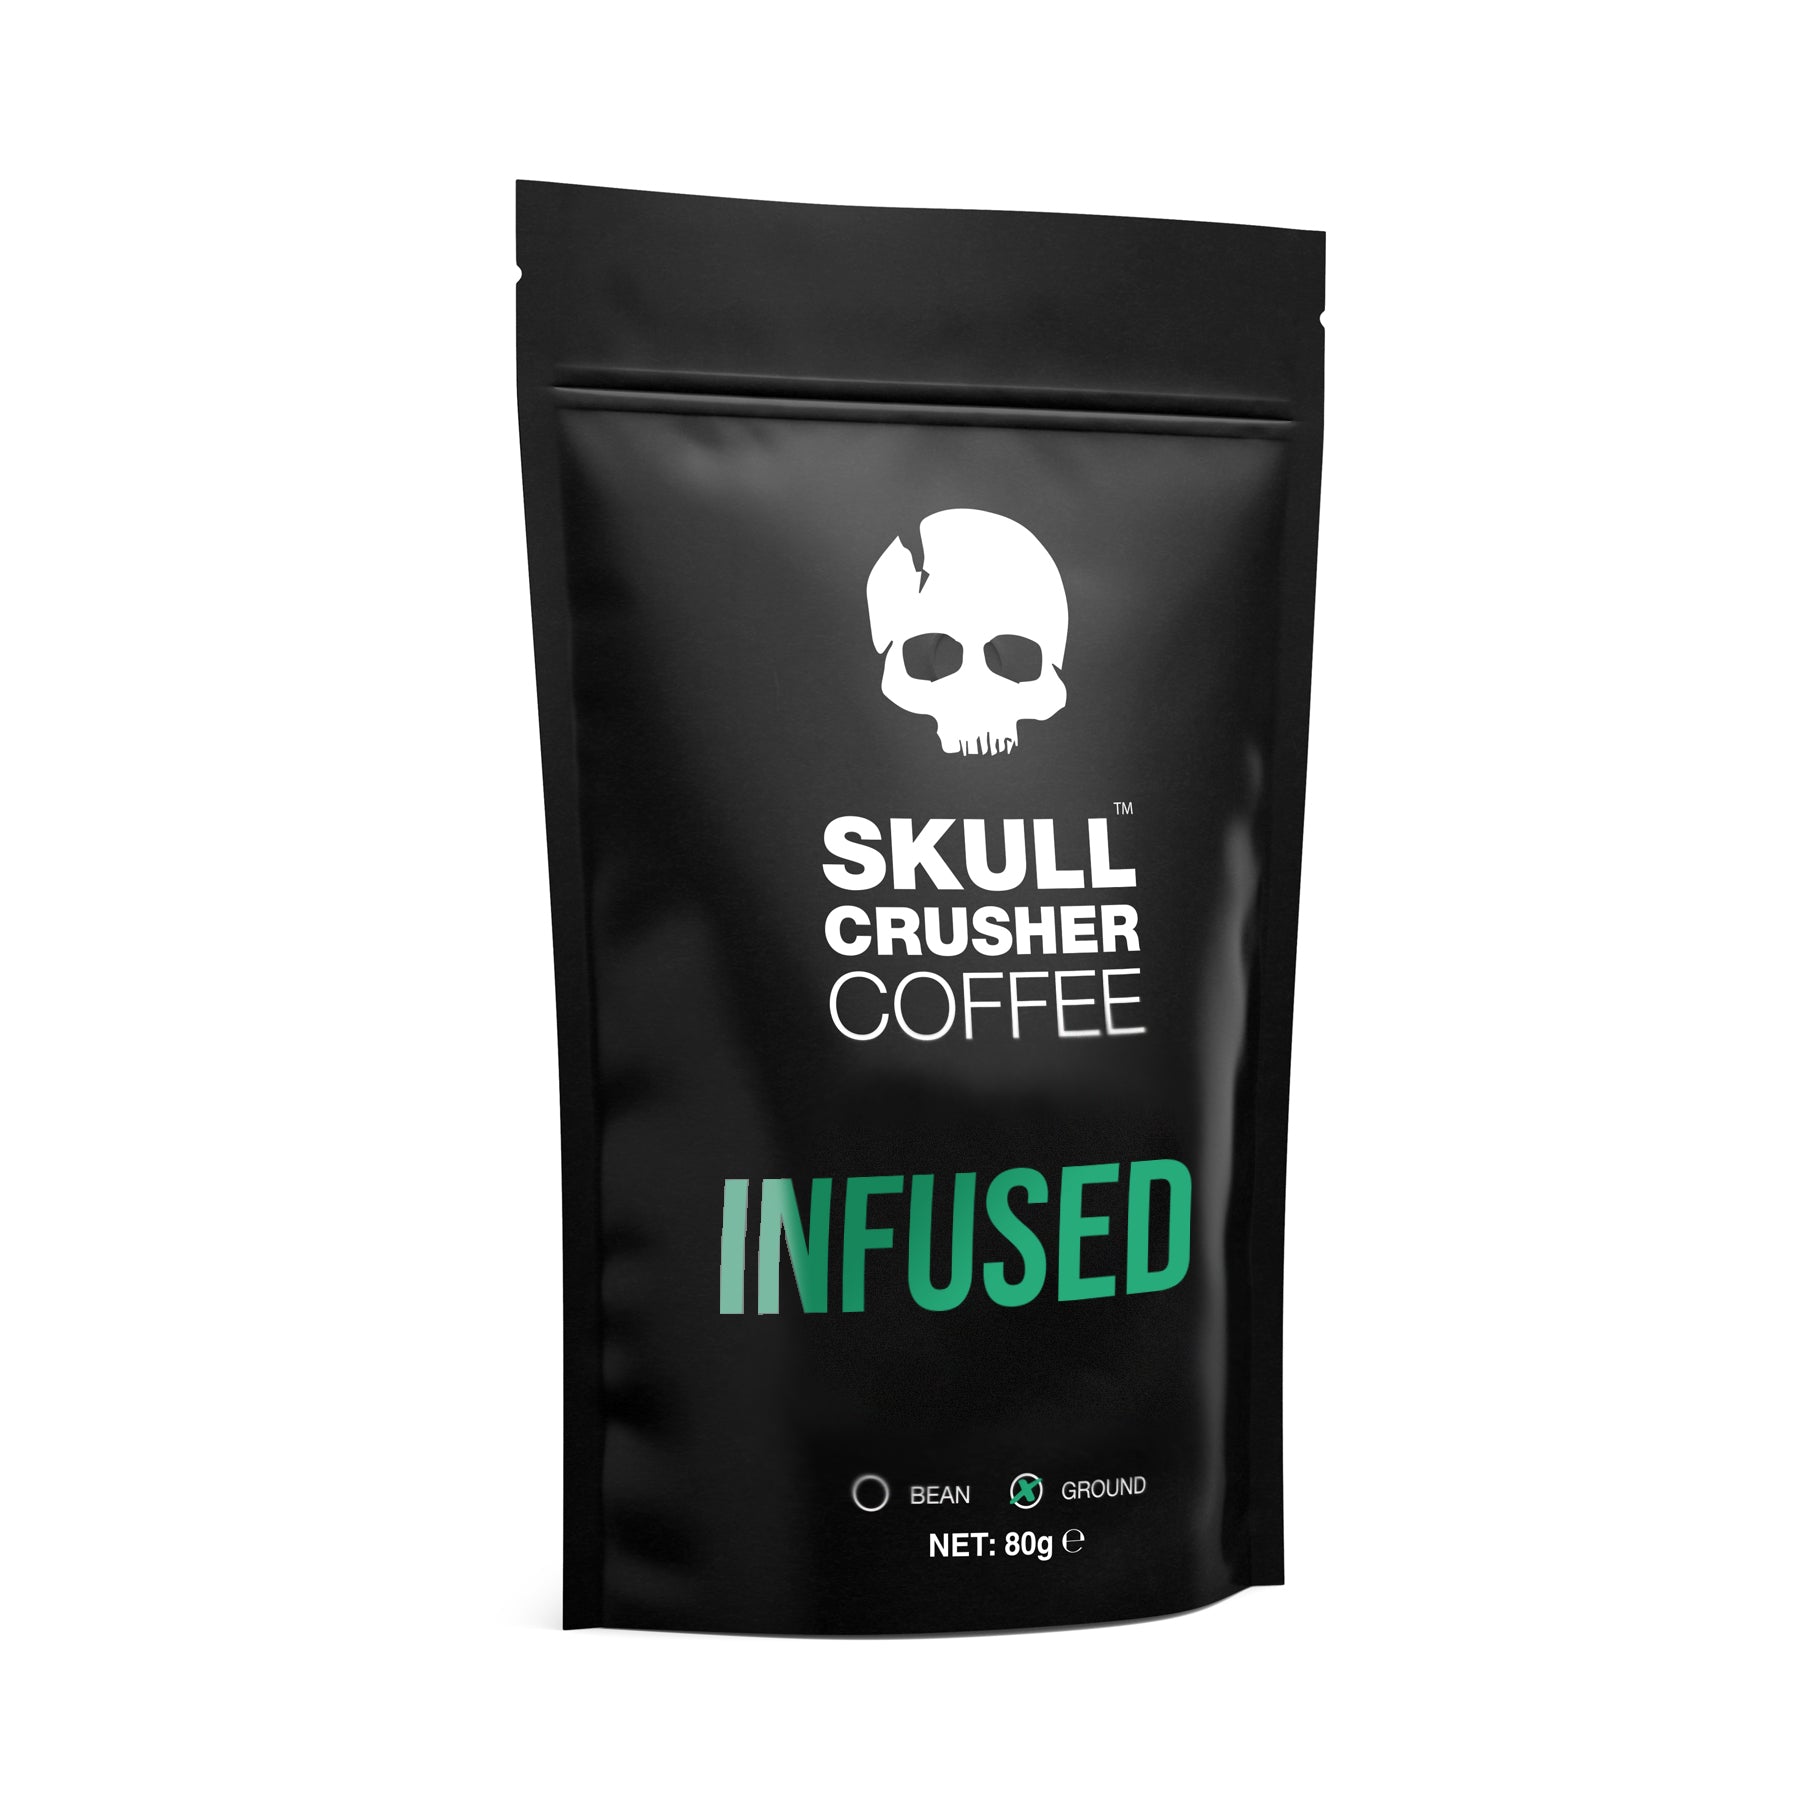 Image of Skull Crusher Coffee - Infused - 80g o SKULL CRUSHER COFFEE 